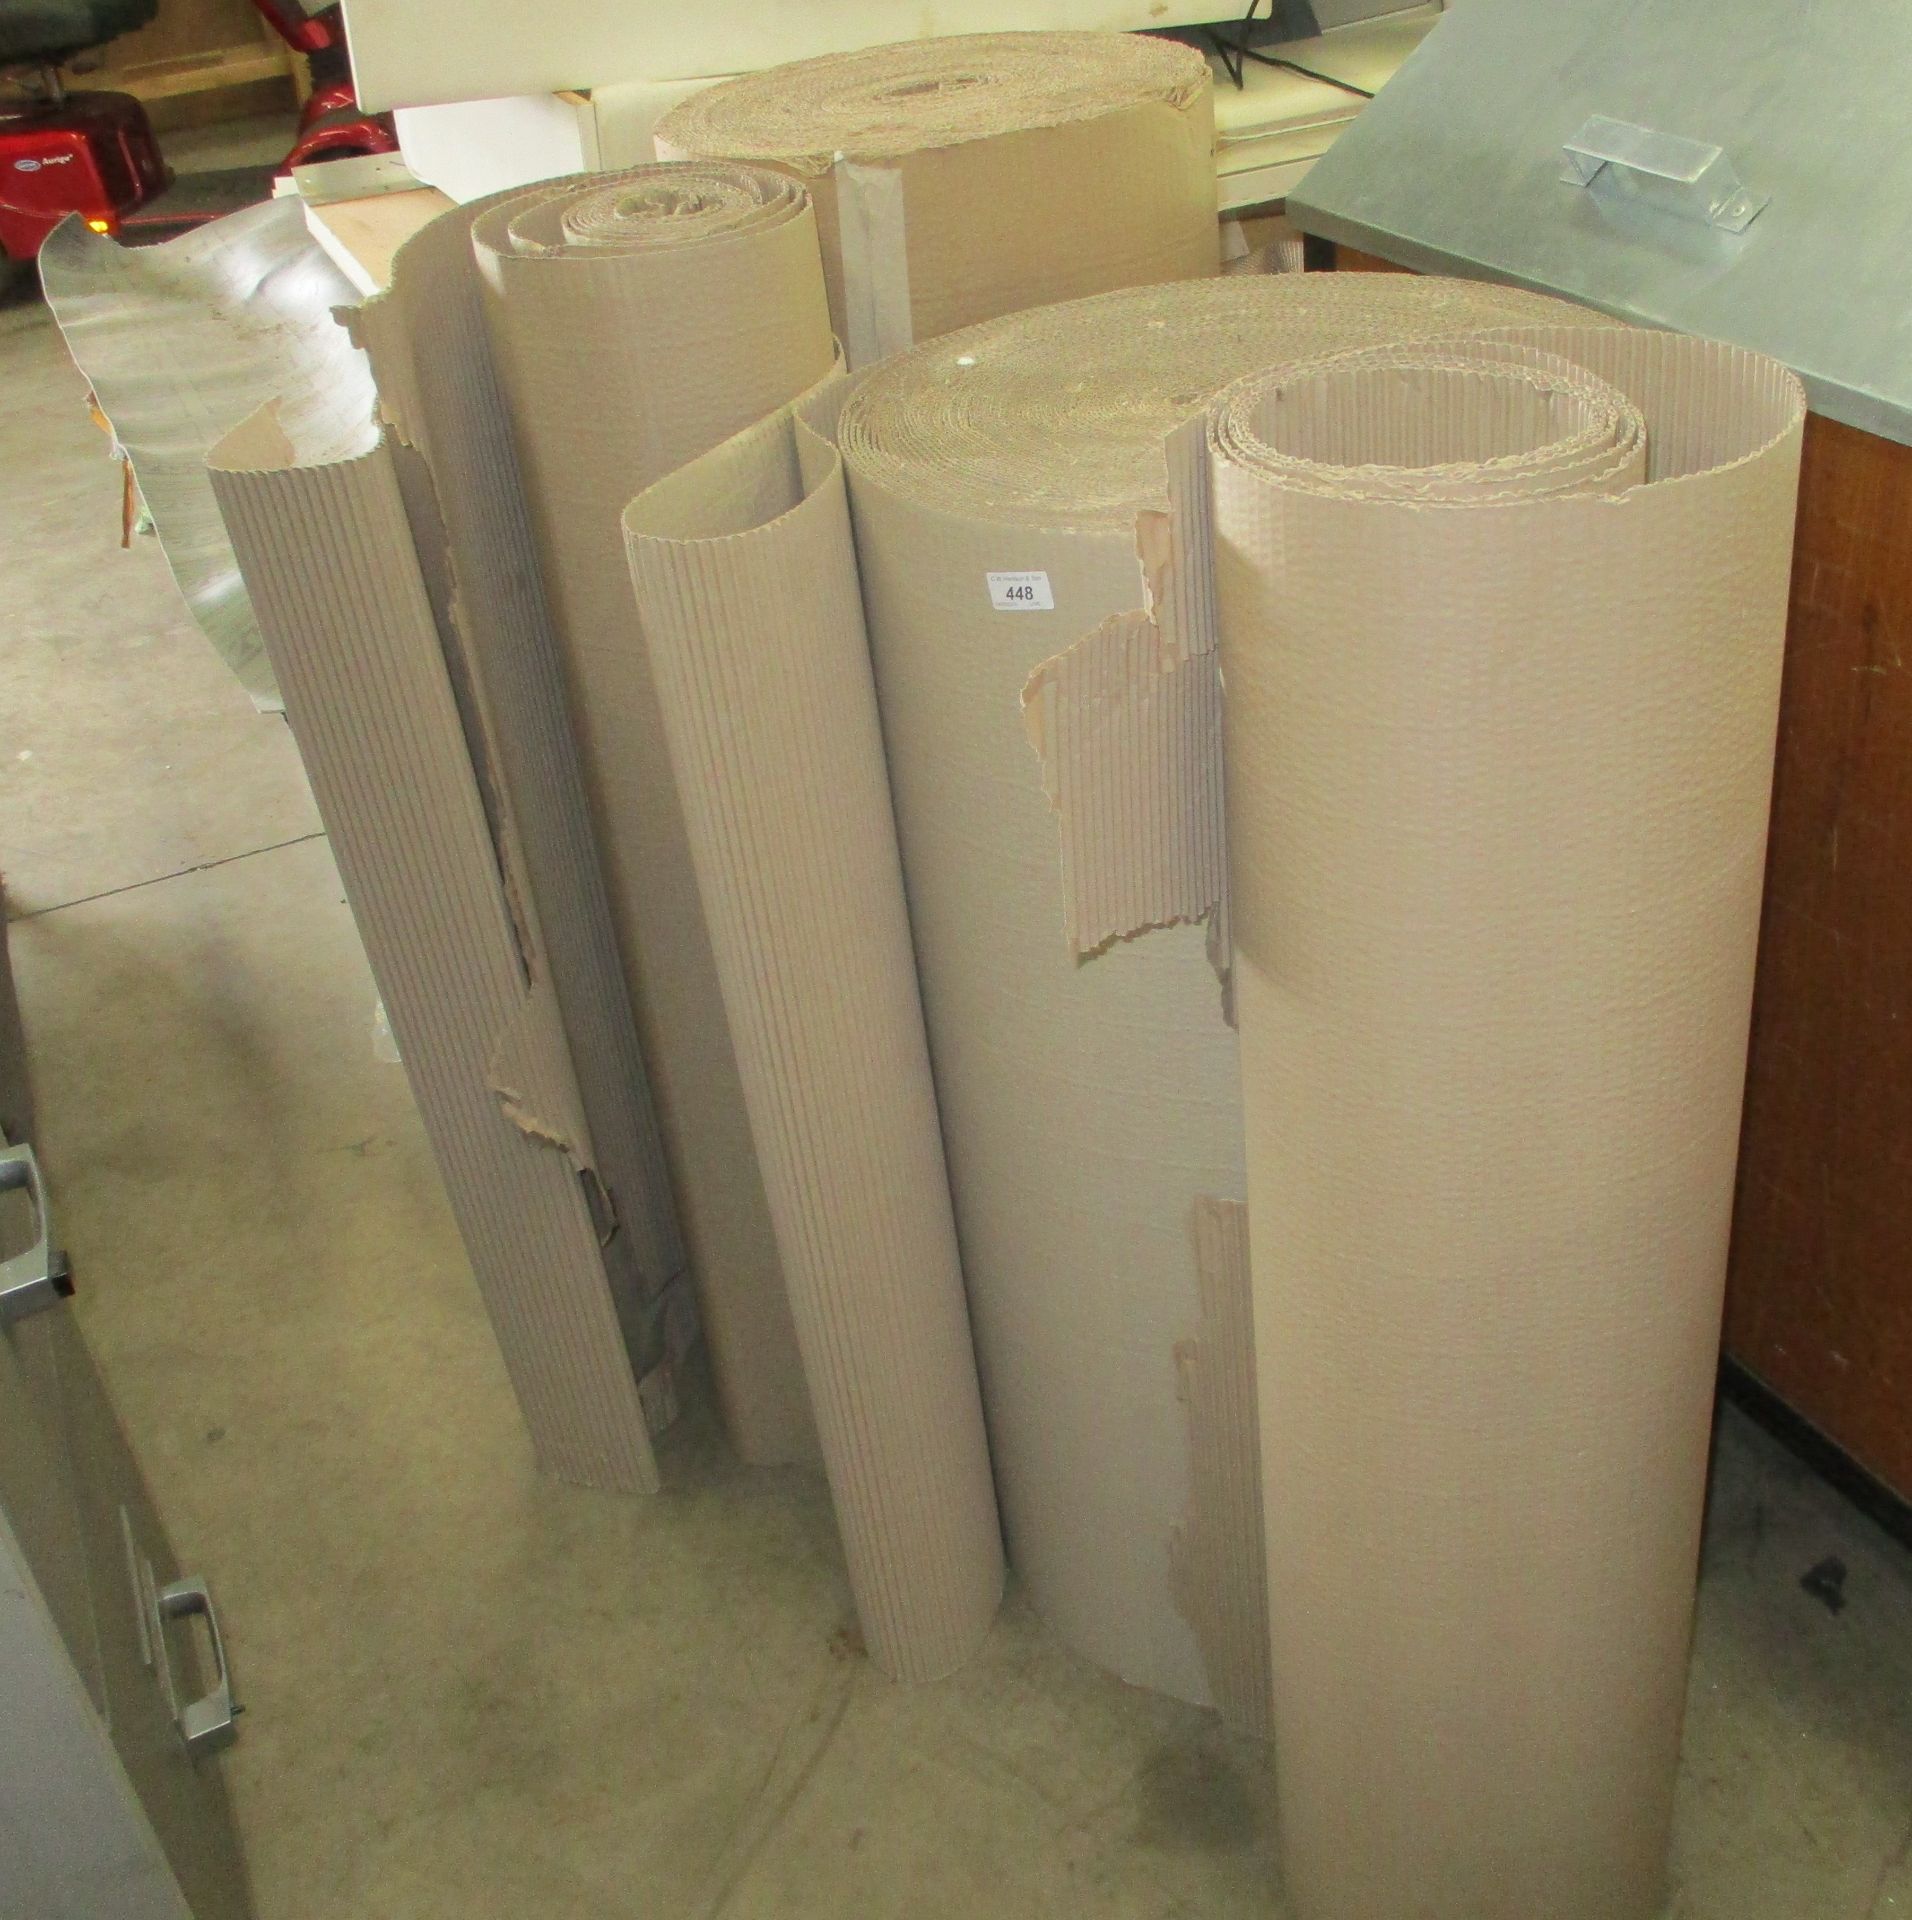 4 part rolls of corrugated cardboard